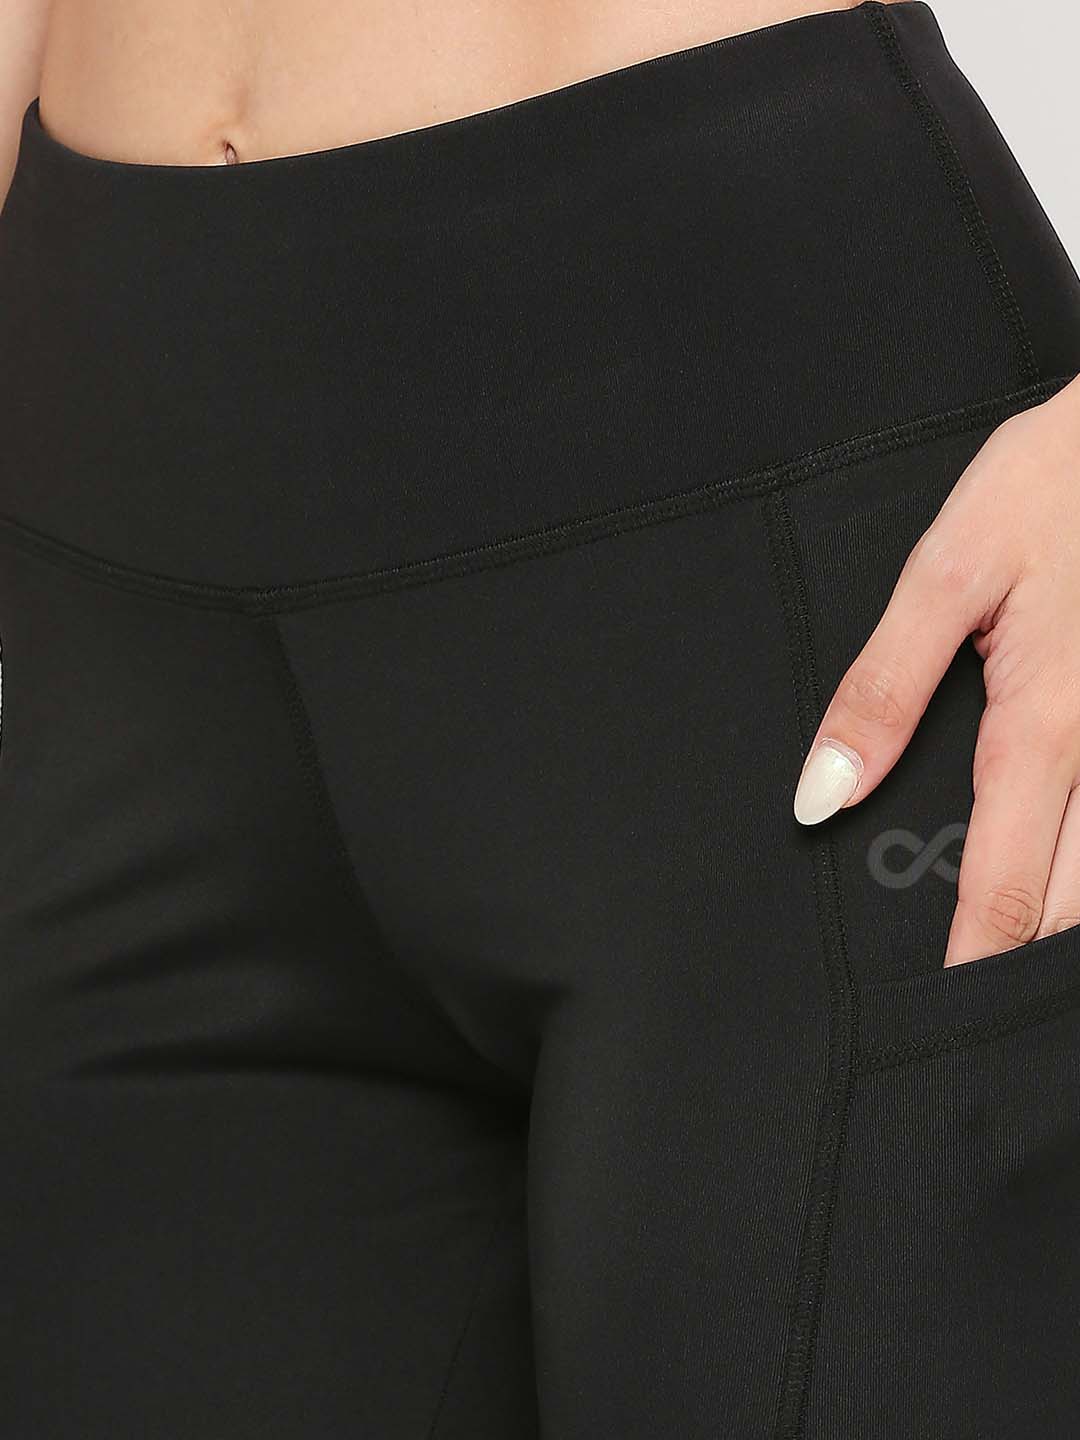 JOYSPELS Workout Leggings for Women High Waisted Gym Tummy Control Yoga  Pants with Pockets Black - Yahoo Shopping